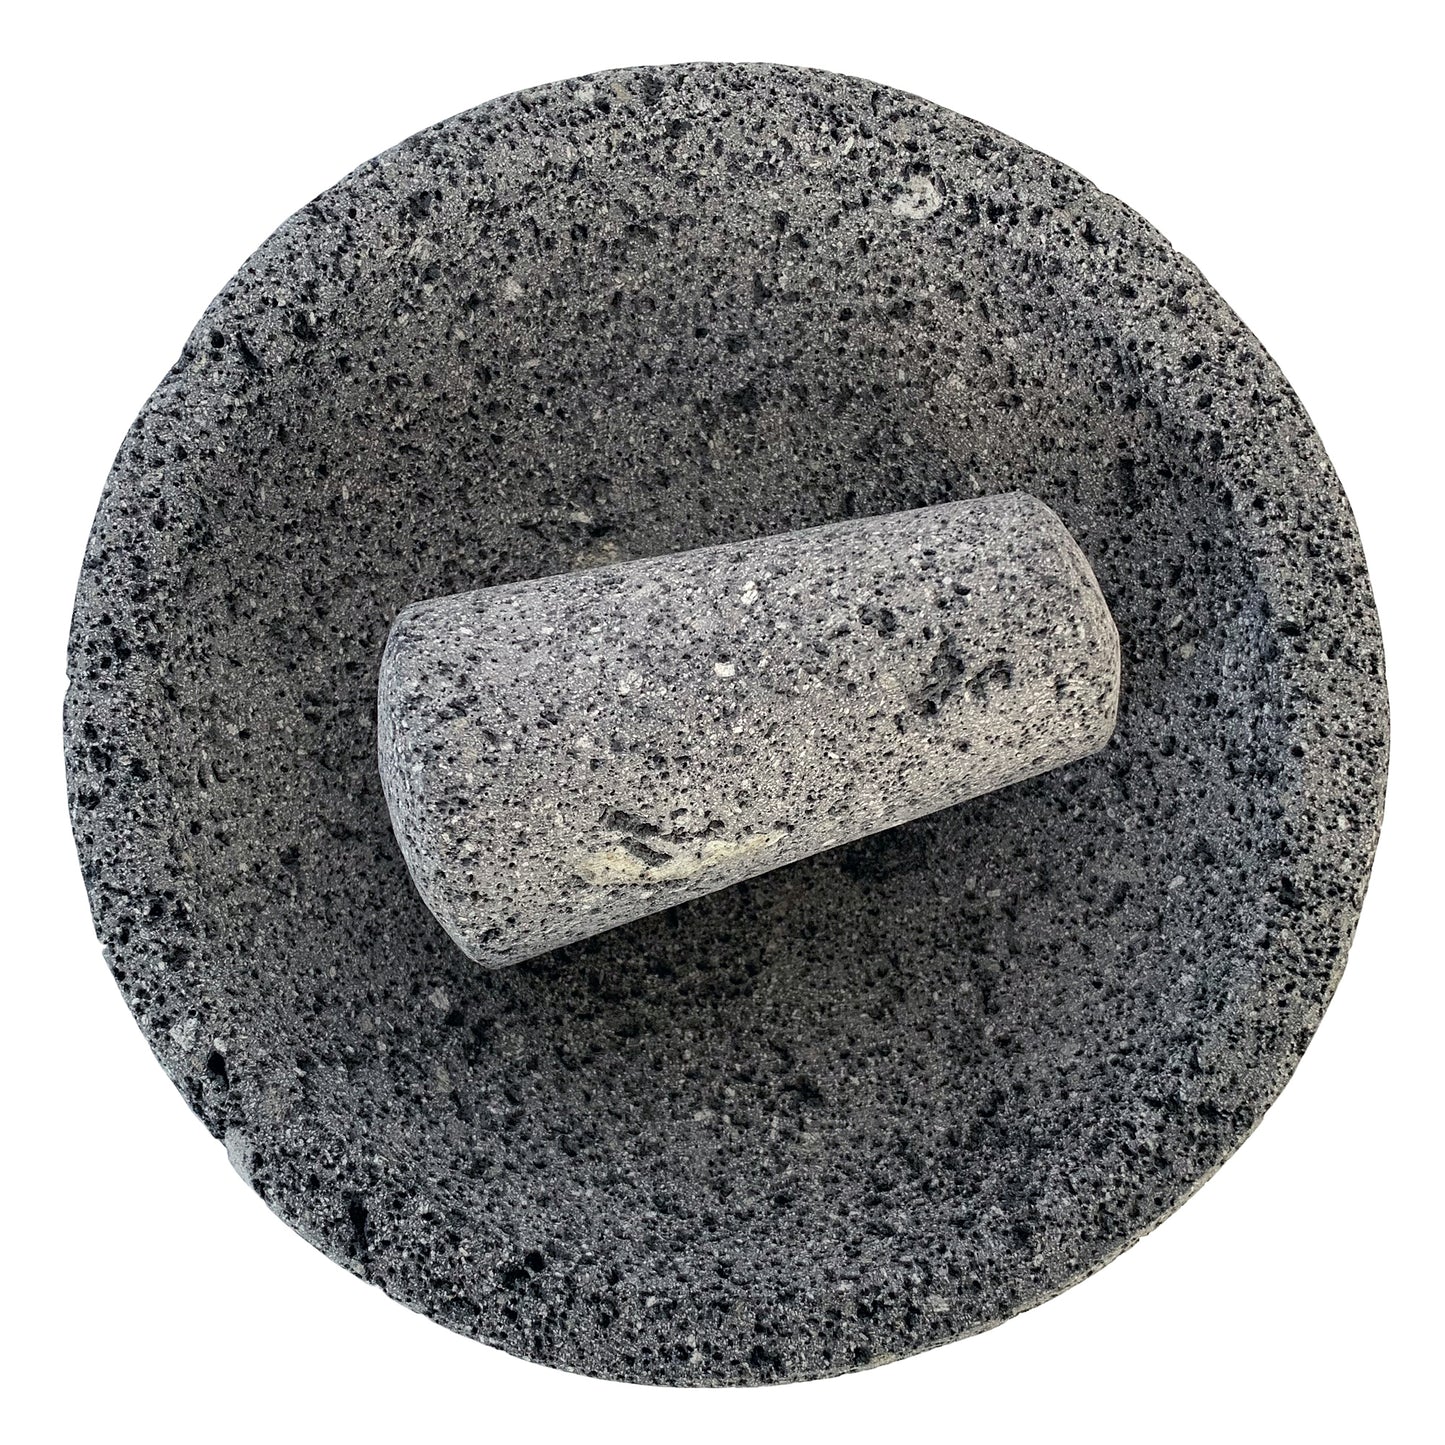 Small (8 inch) Mexican Molcajete Bowl | Hand-carved 100% Volcanic Stone | Molcajete Mexicano de Piedra Volcanica